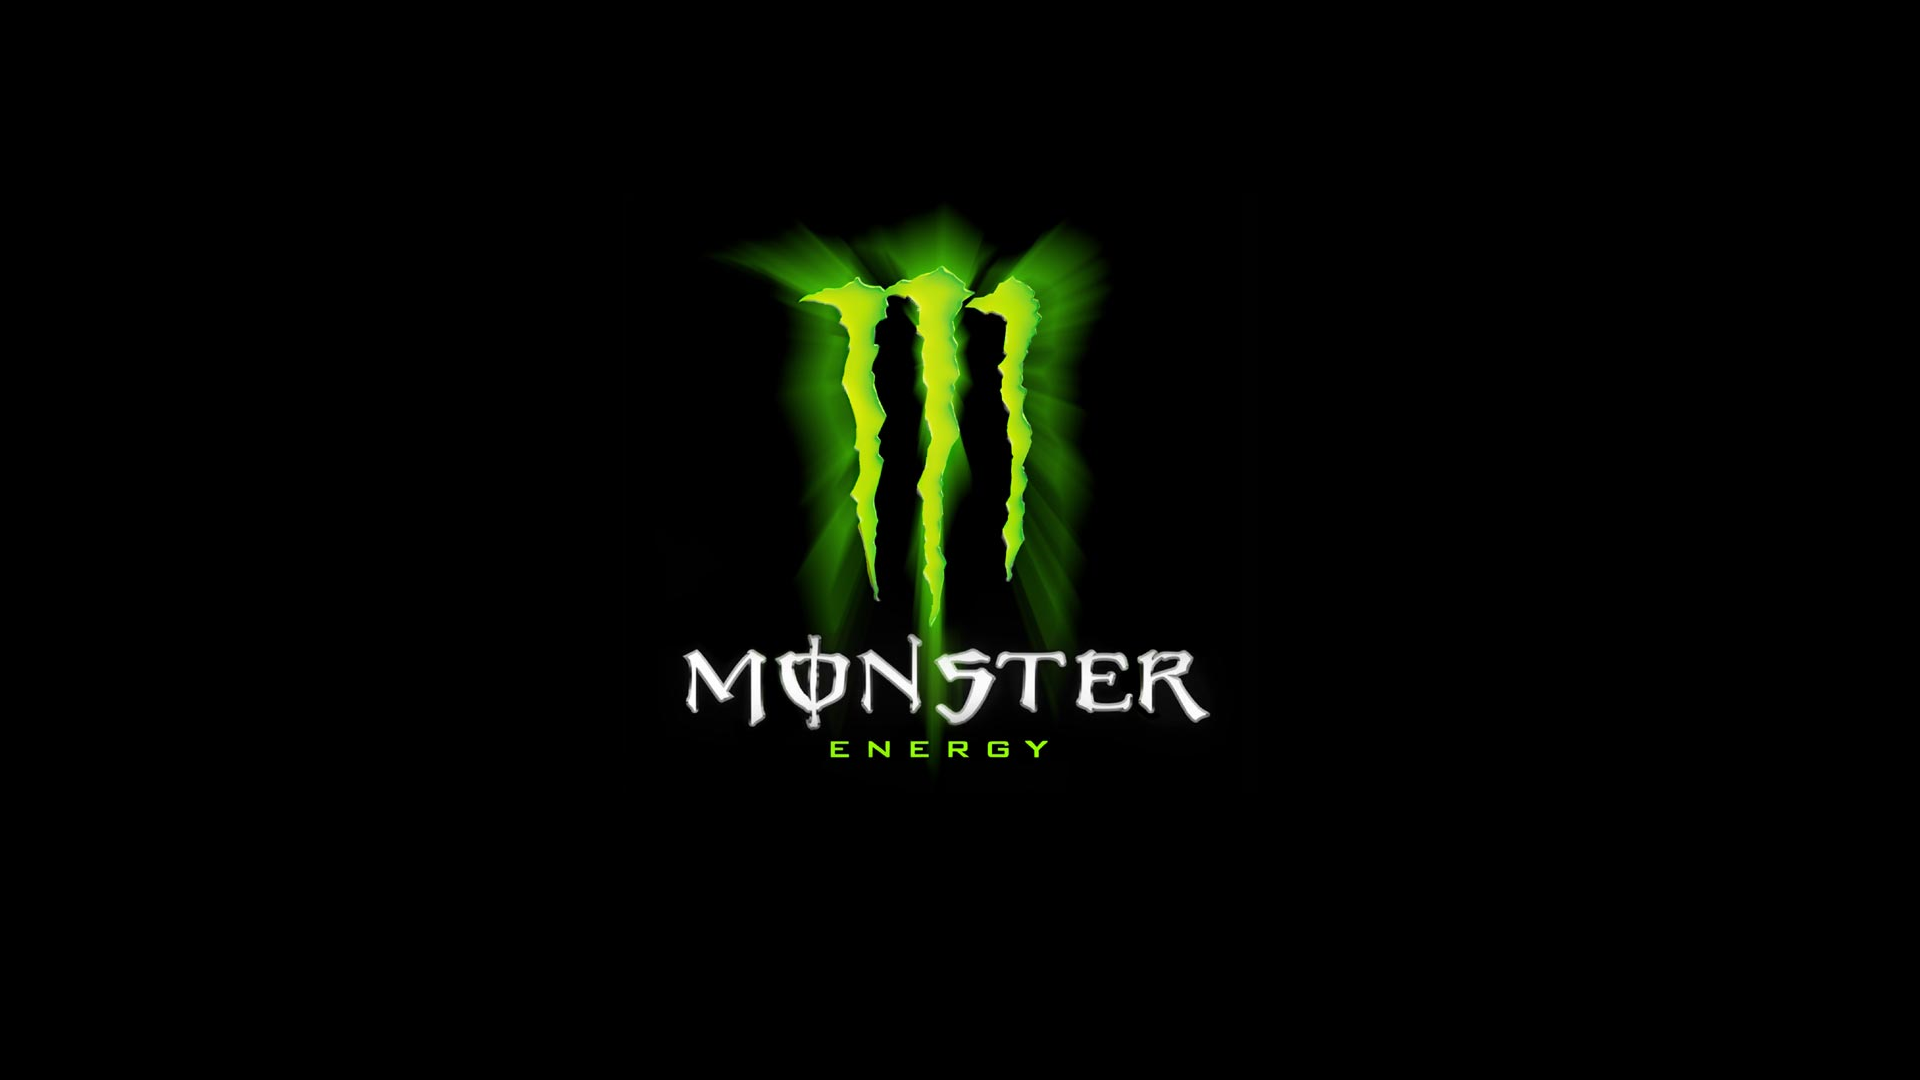 Description Monster Energy Logo Wallpaper is a hi res Wallpaper for